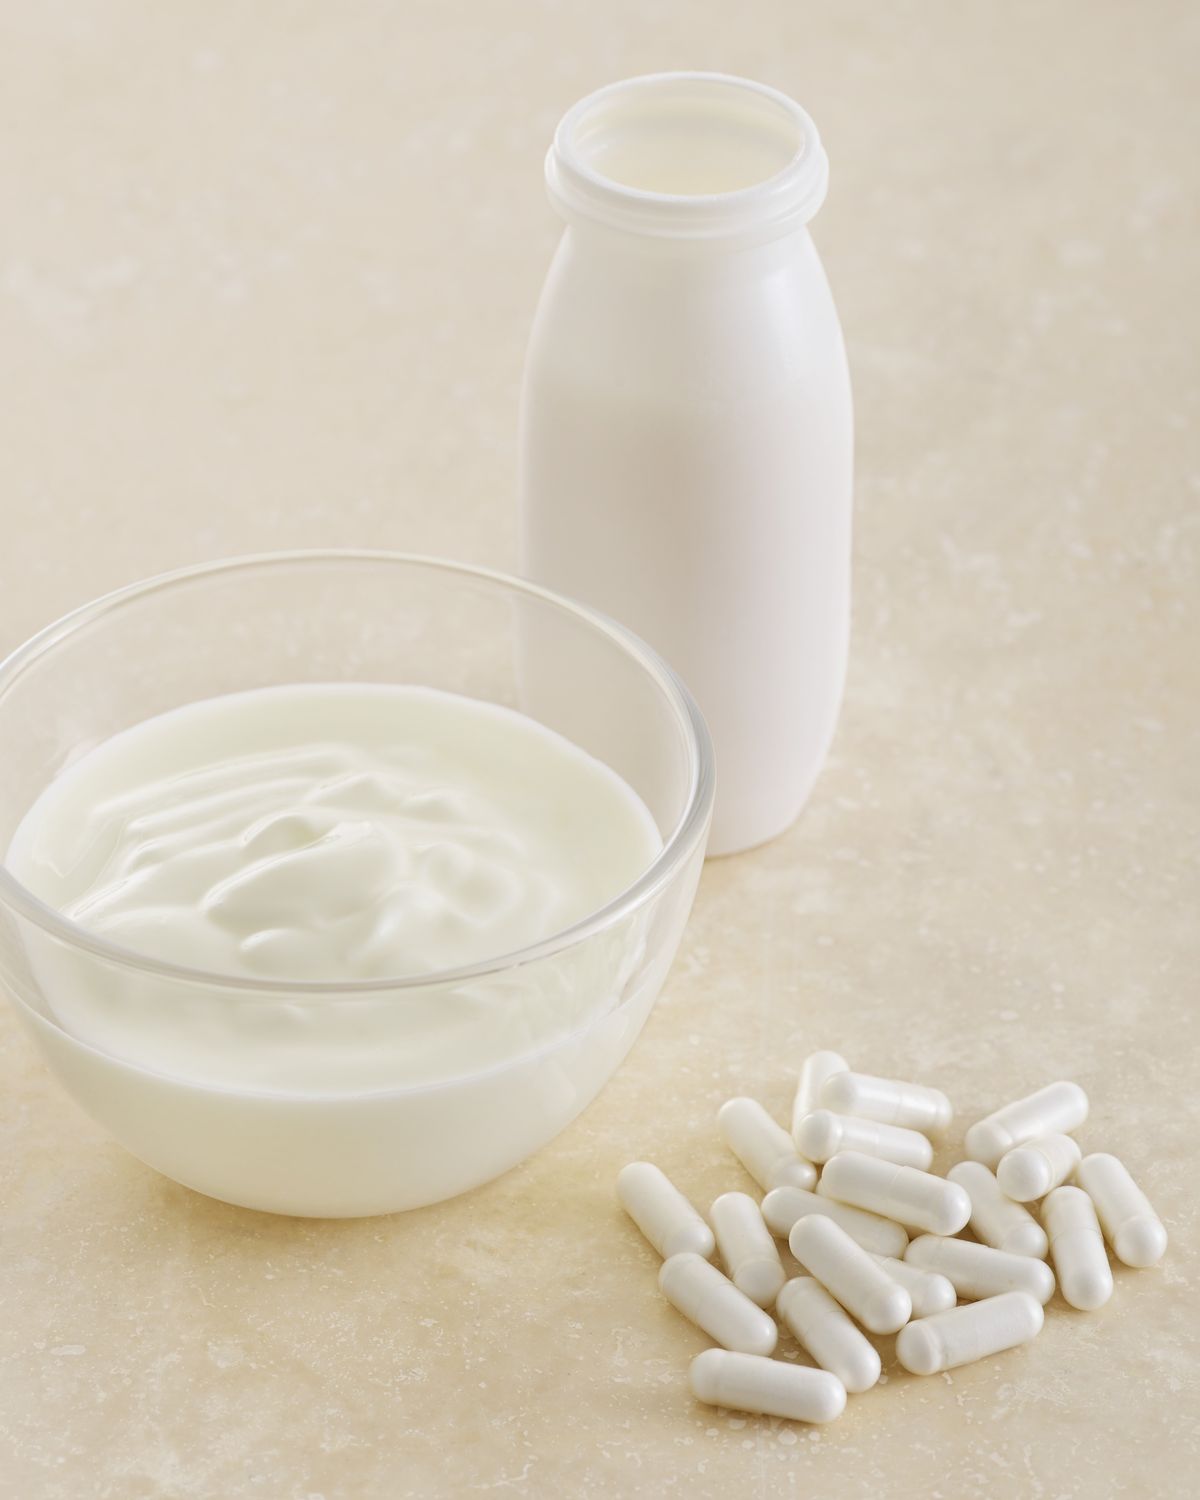 Probiotic pills and yoghurt